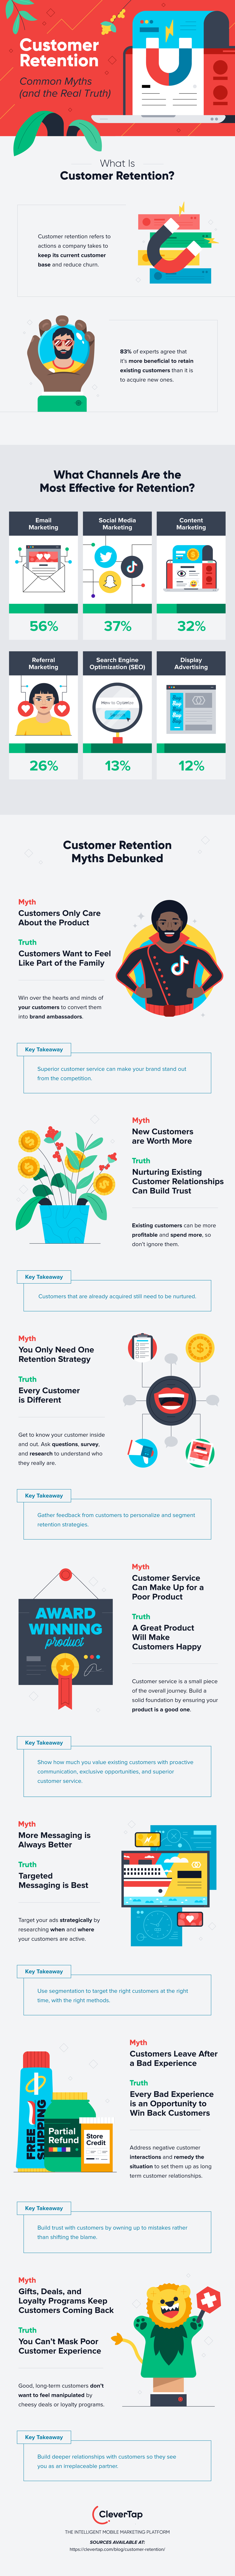 customer-retention-lessons-full-infographic